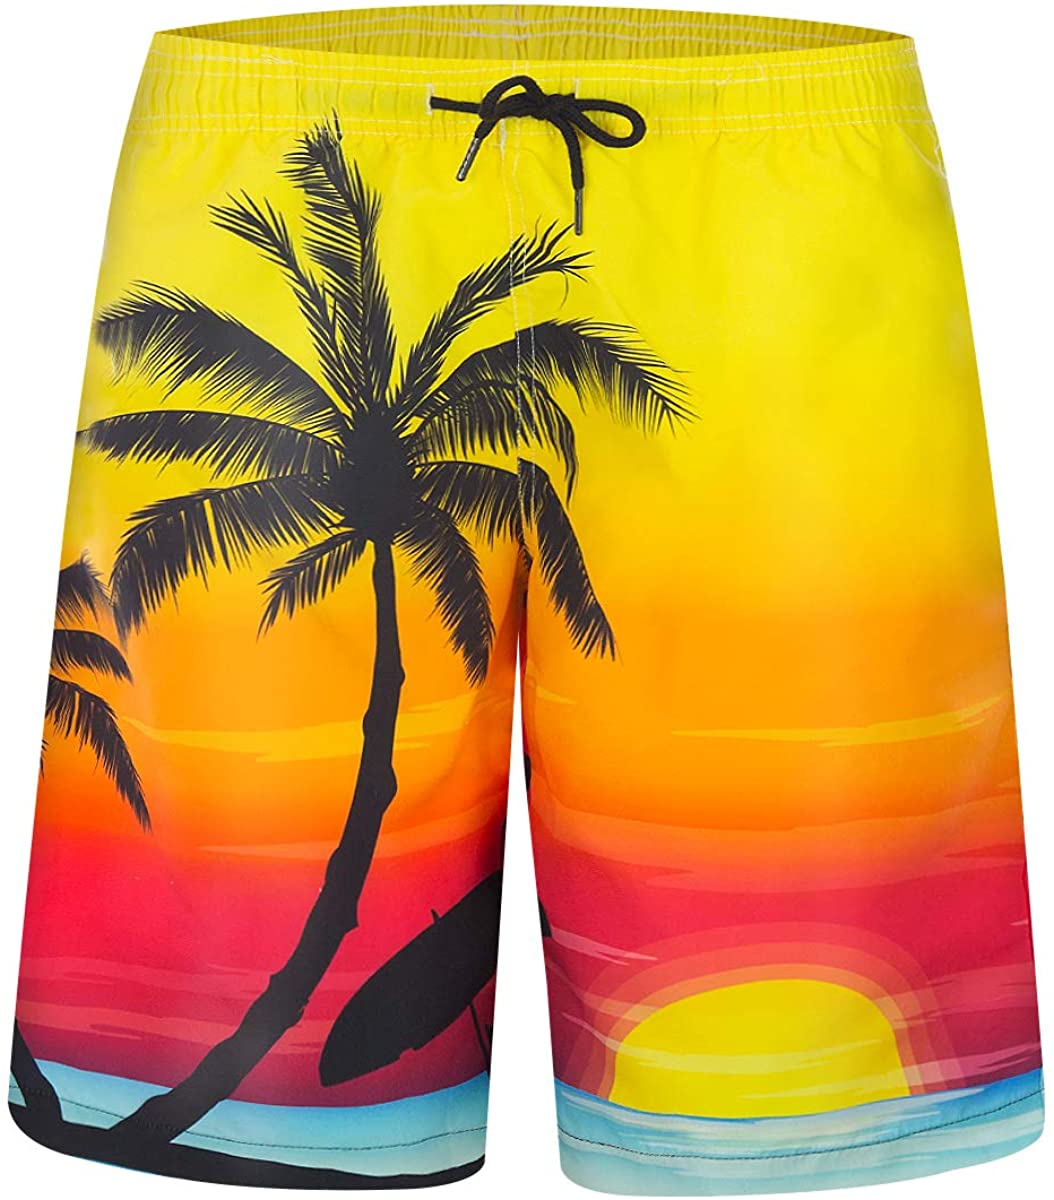 zeetoo Mens Printed Funny Swim Trunks Quick Dry Beachwear Sports ...